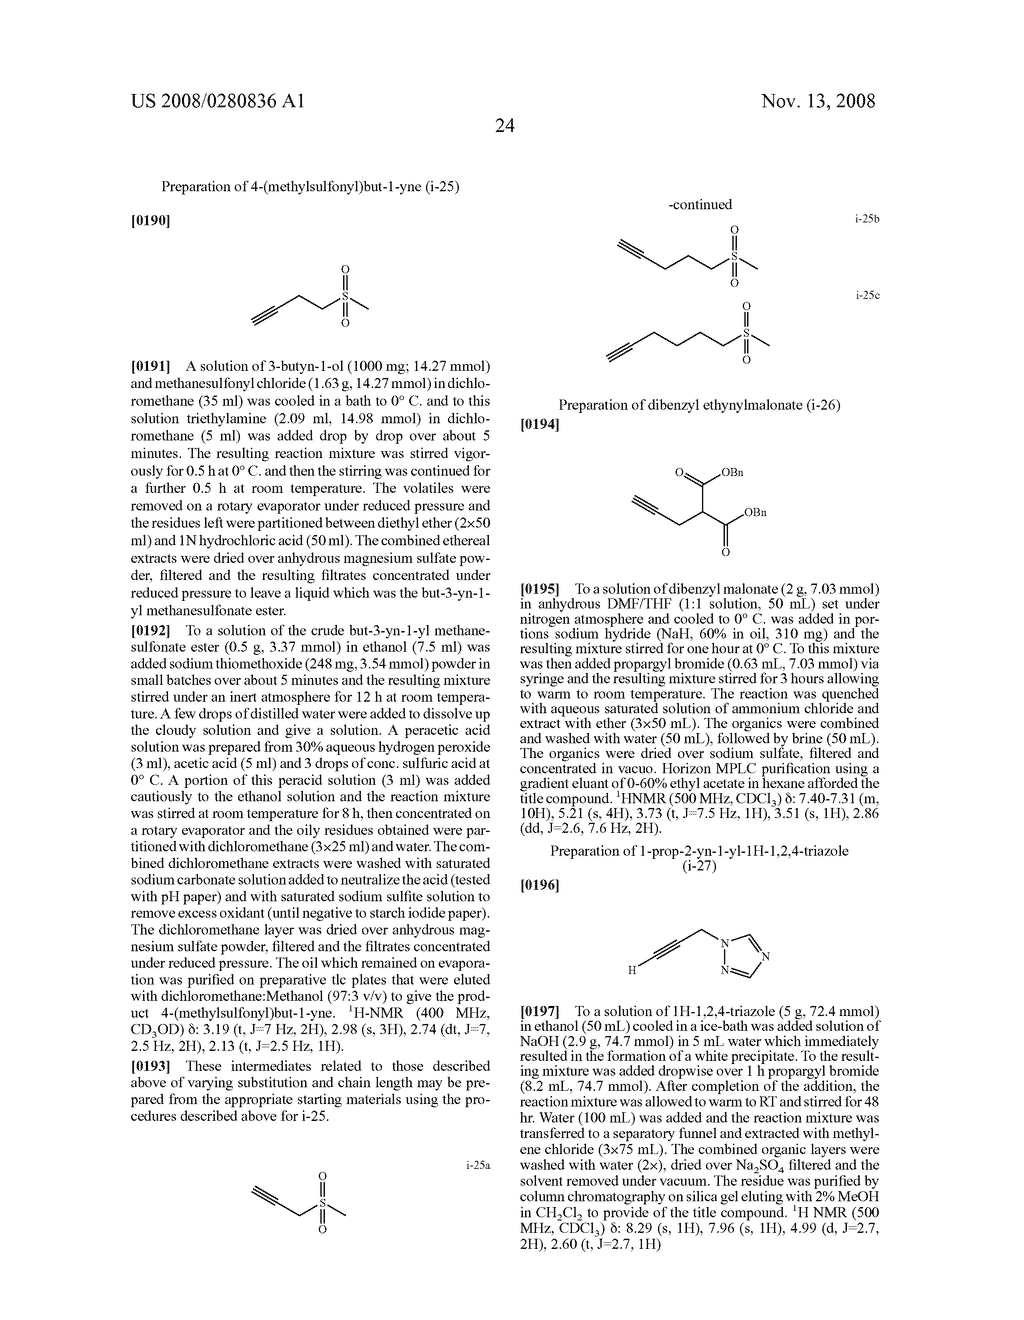 Anti-hypercholesterolemic biaryl azetidinone compounds - diagram, schematic, and image 25